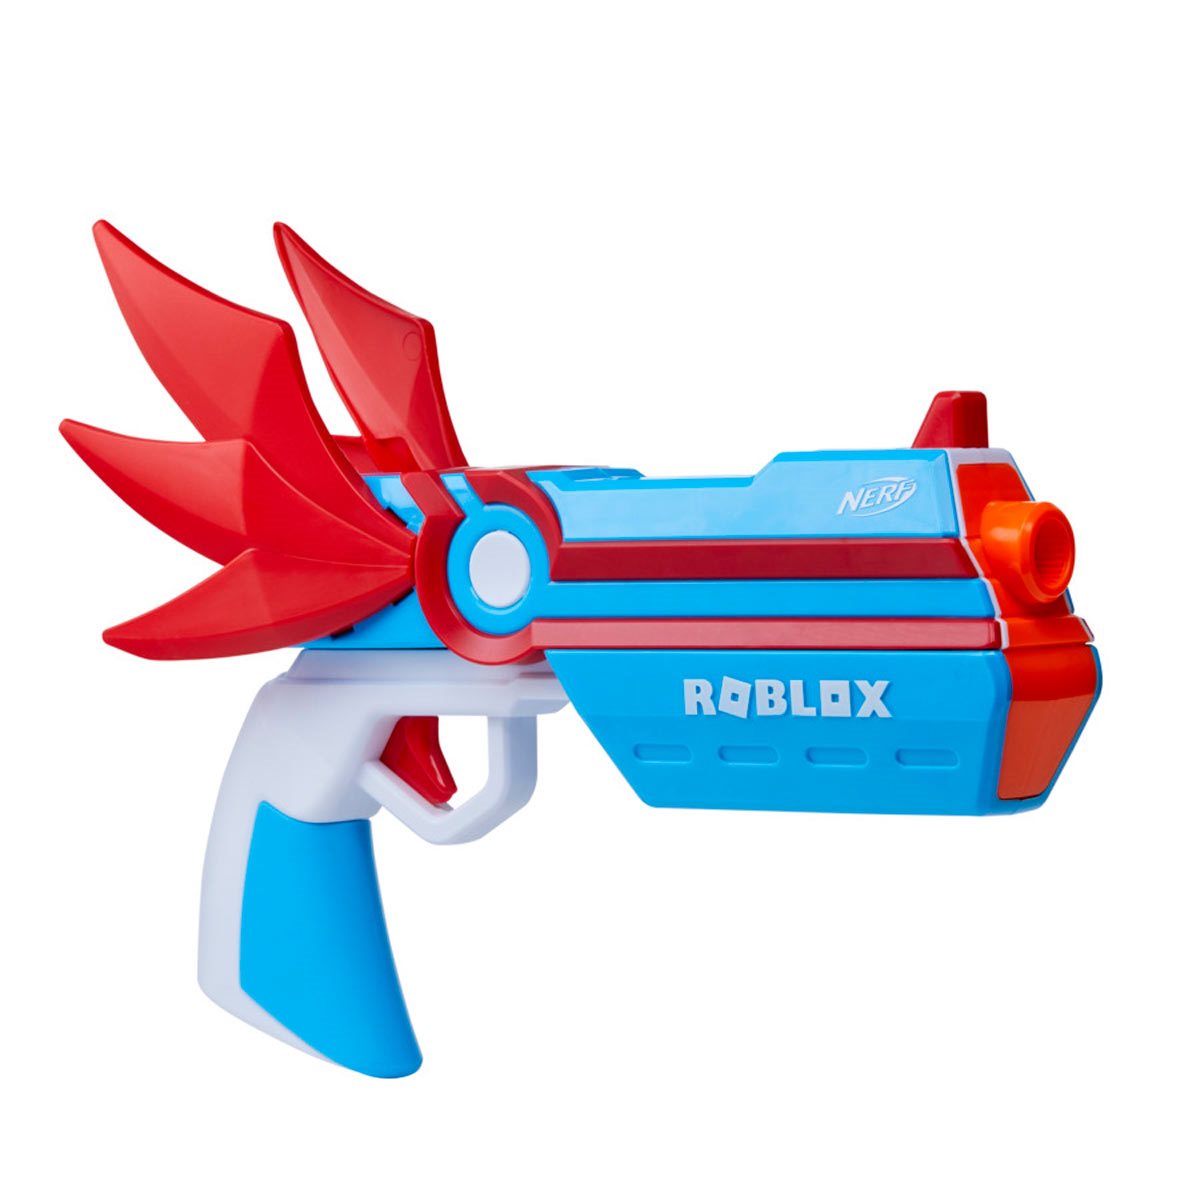 Nerf Roblox Arsenal Pulse Laser Motorized Dart Blaster Includes 10 Nerf  Darts